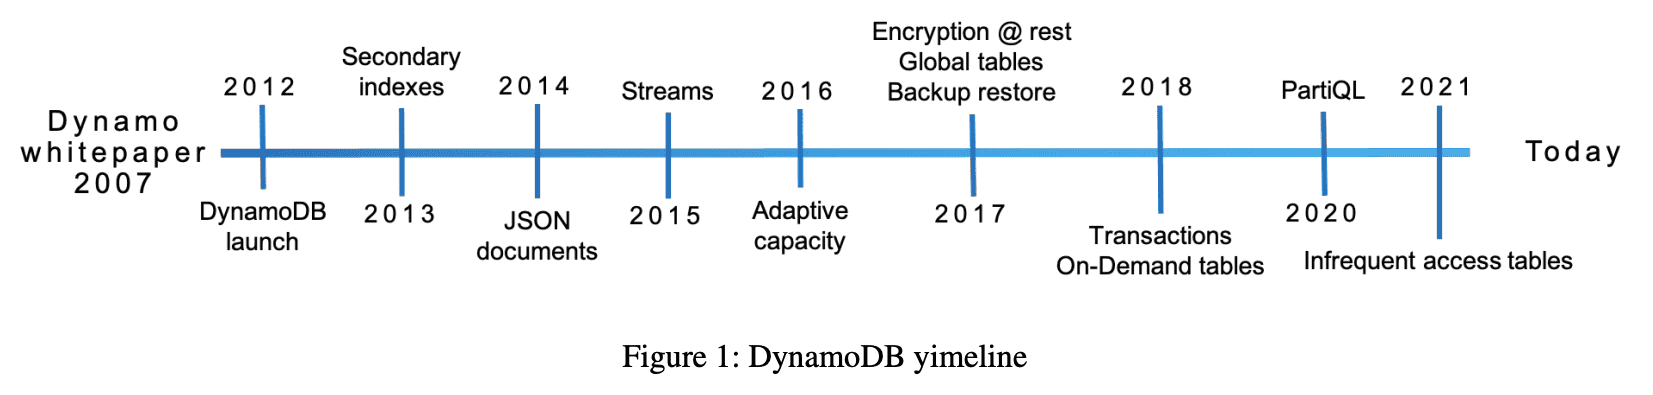 DynamoDB Timeline